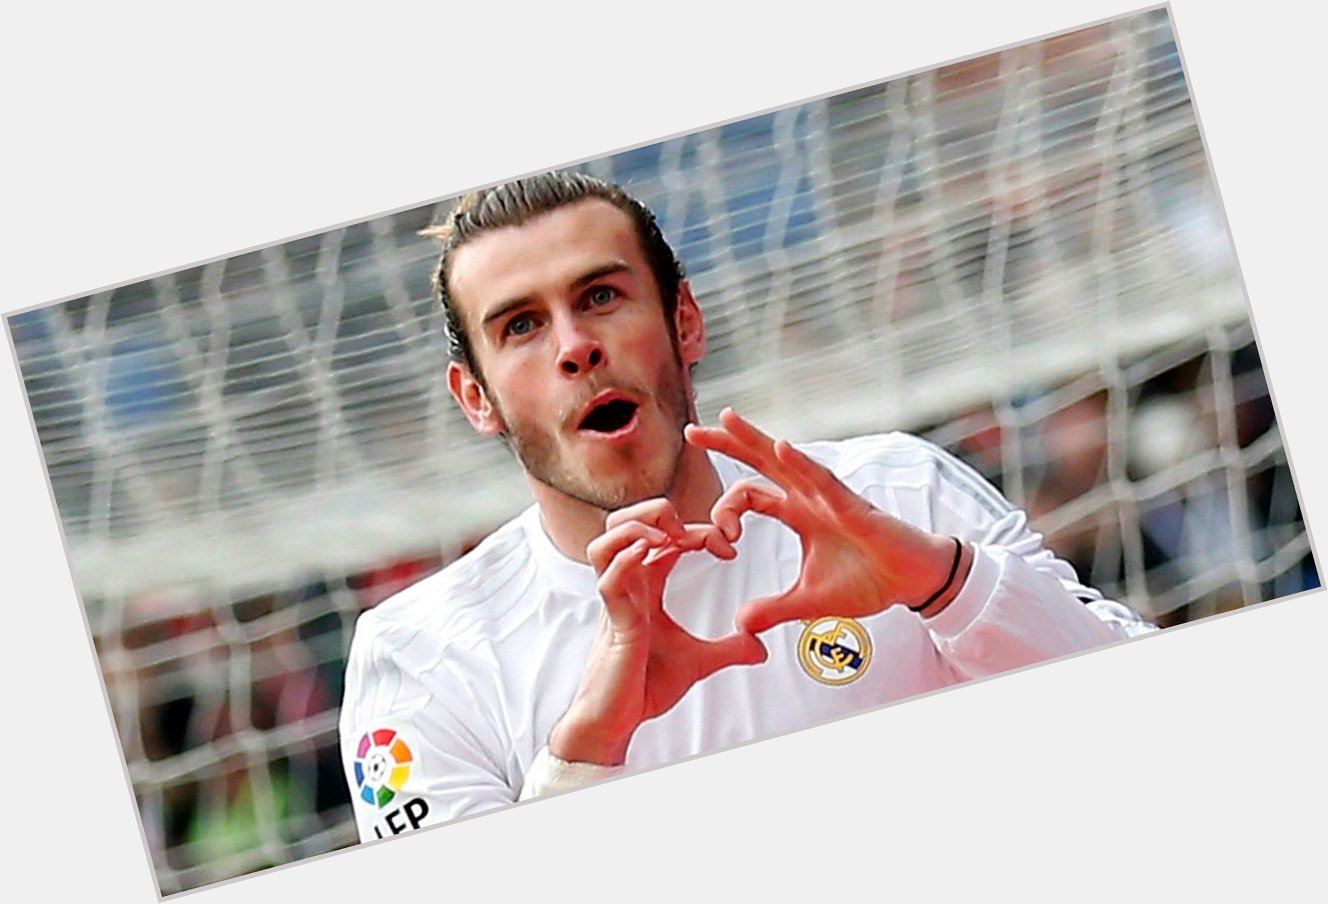 B4 Parking wishes, Gareth Bale, Happy Birthday!    